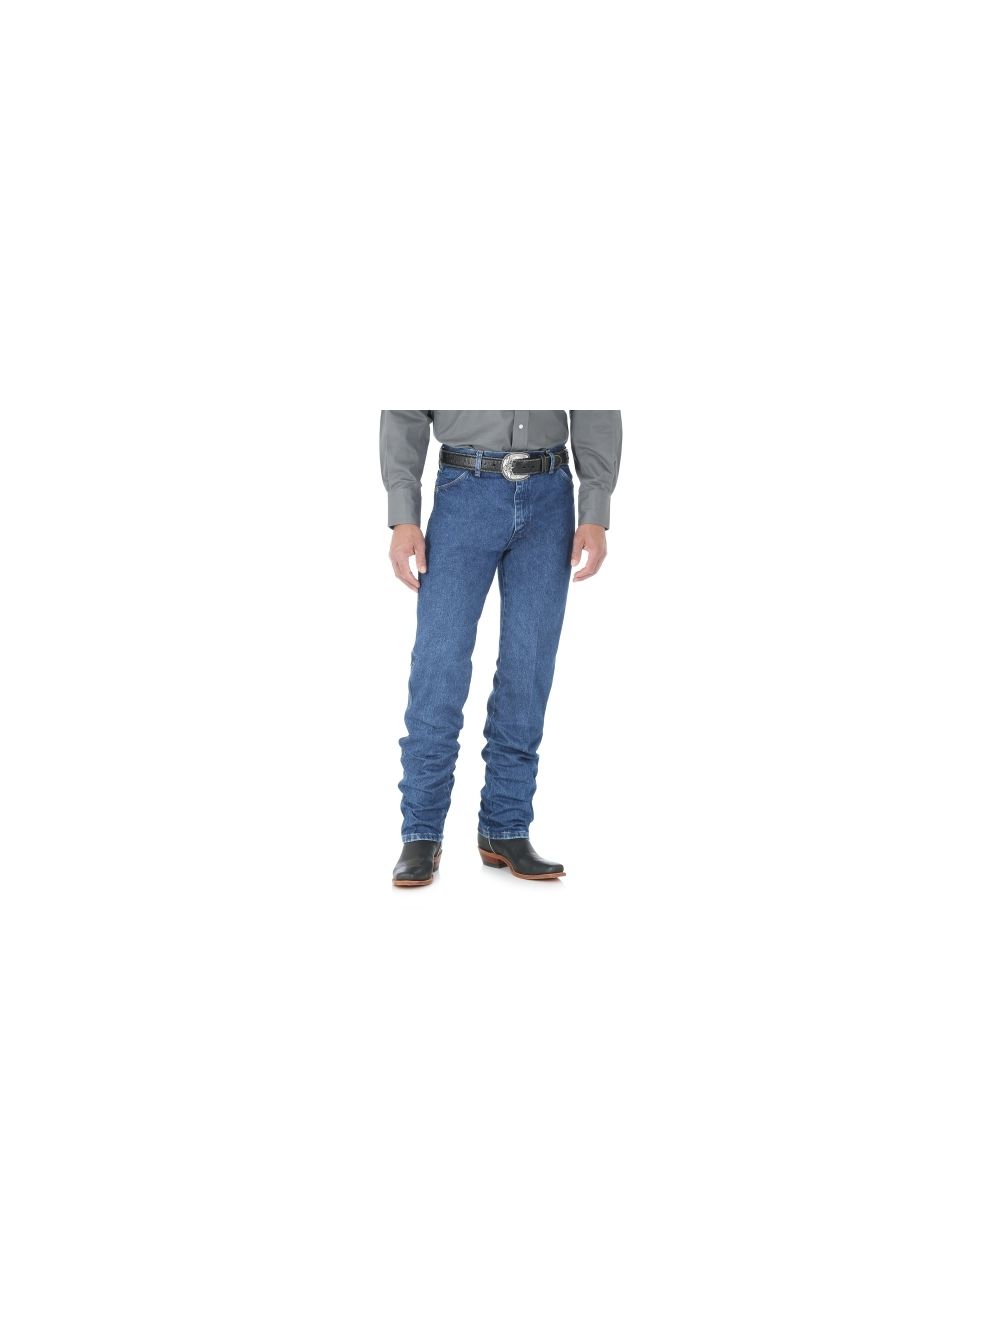 Wrangler® Cowboy Cut® Original Fit Jean-Stonewashed